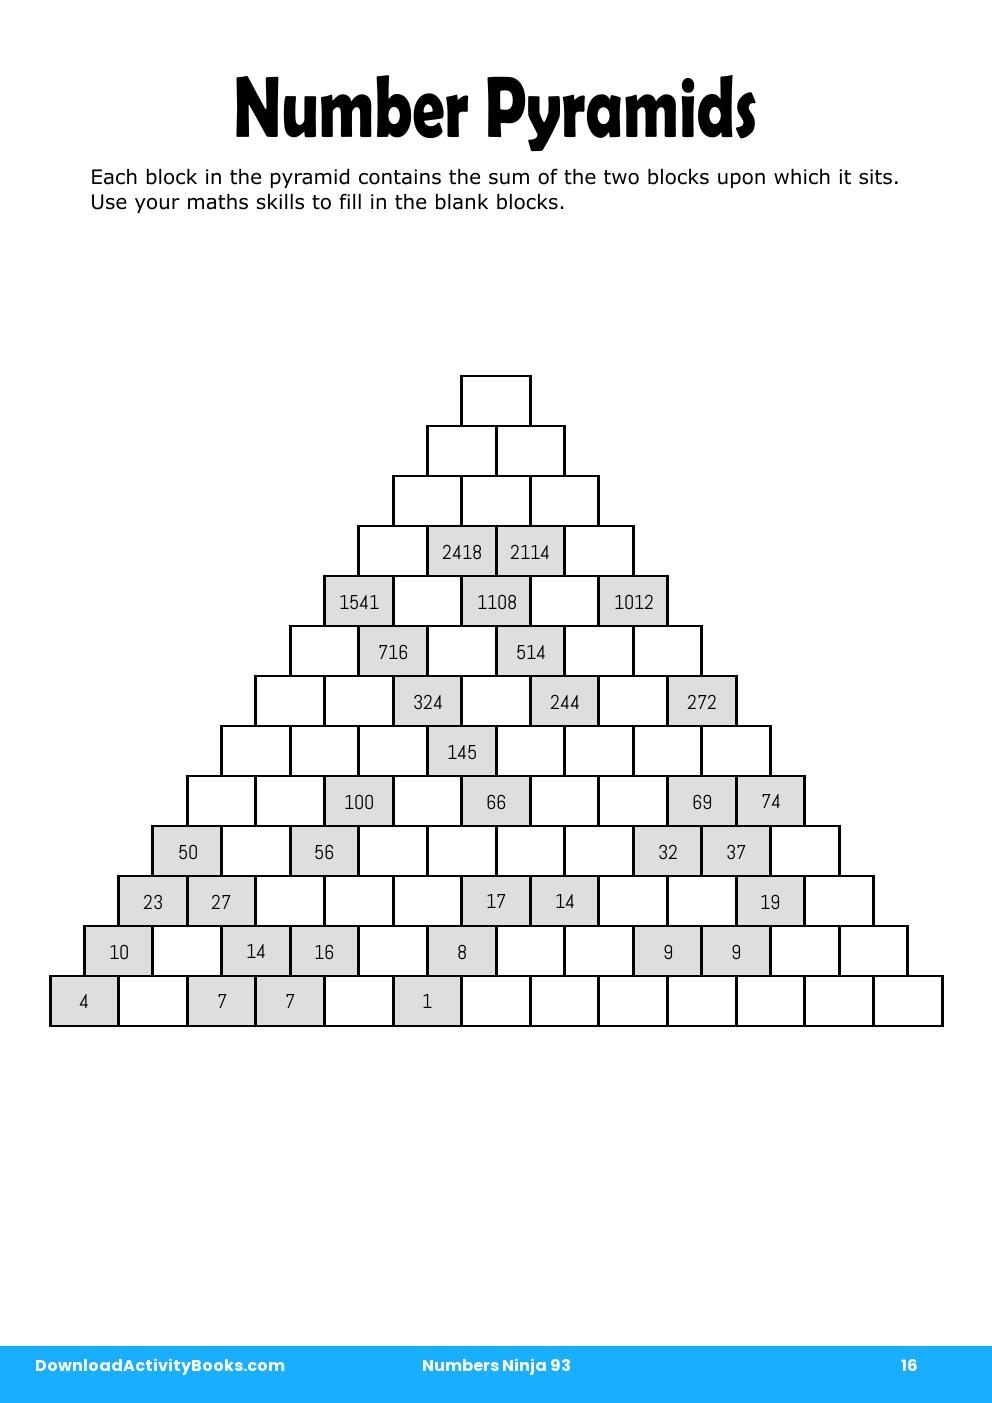 Number Pyramids in Numbers Ninja 93